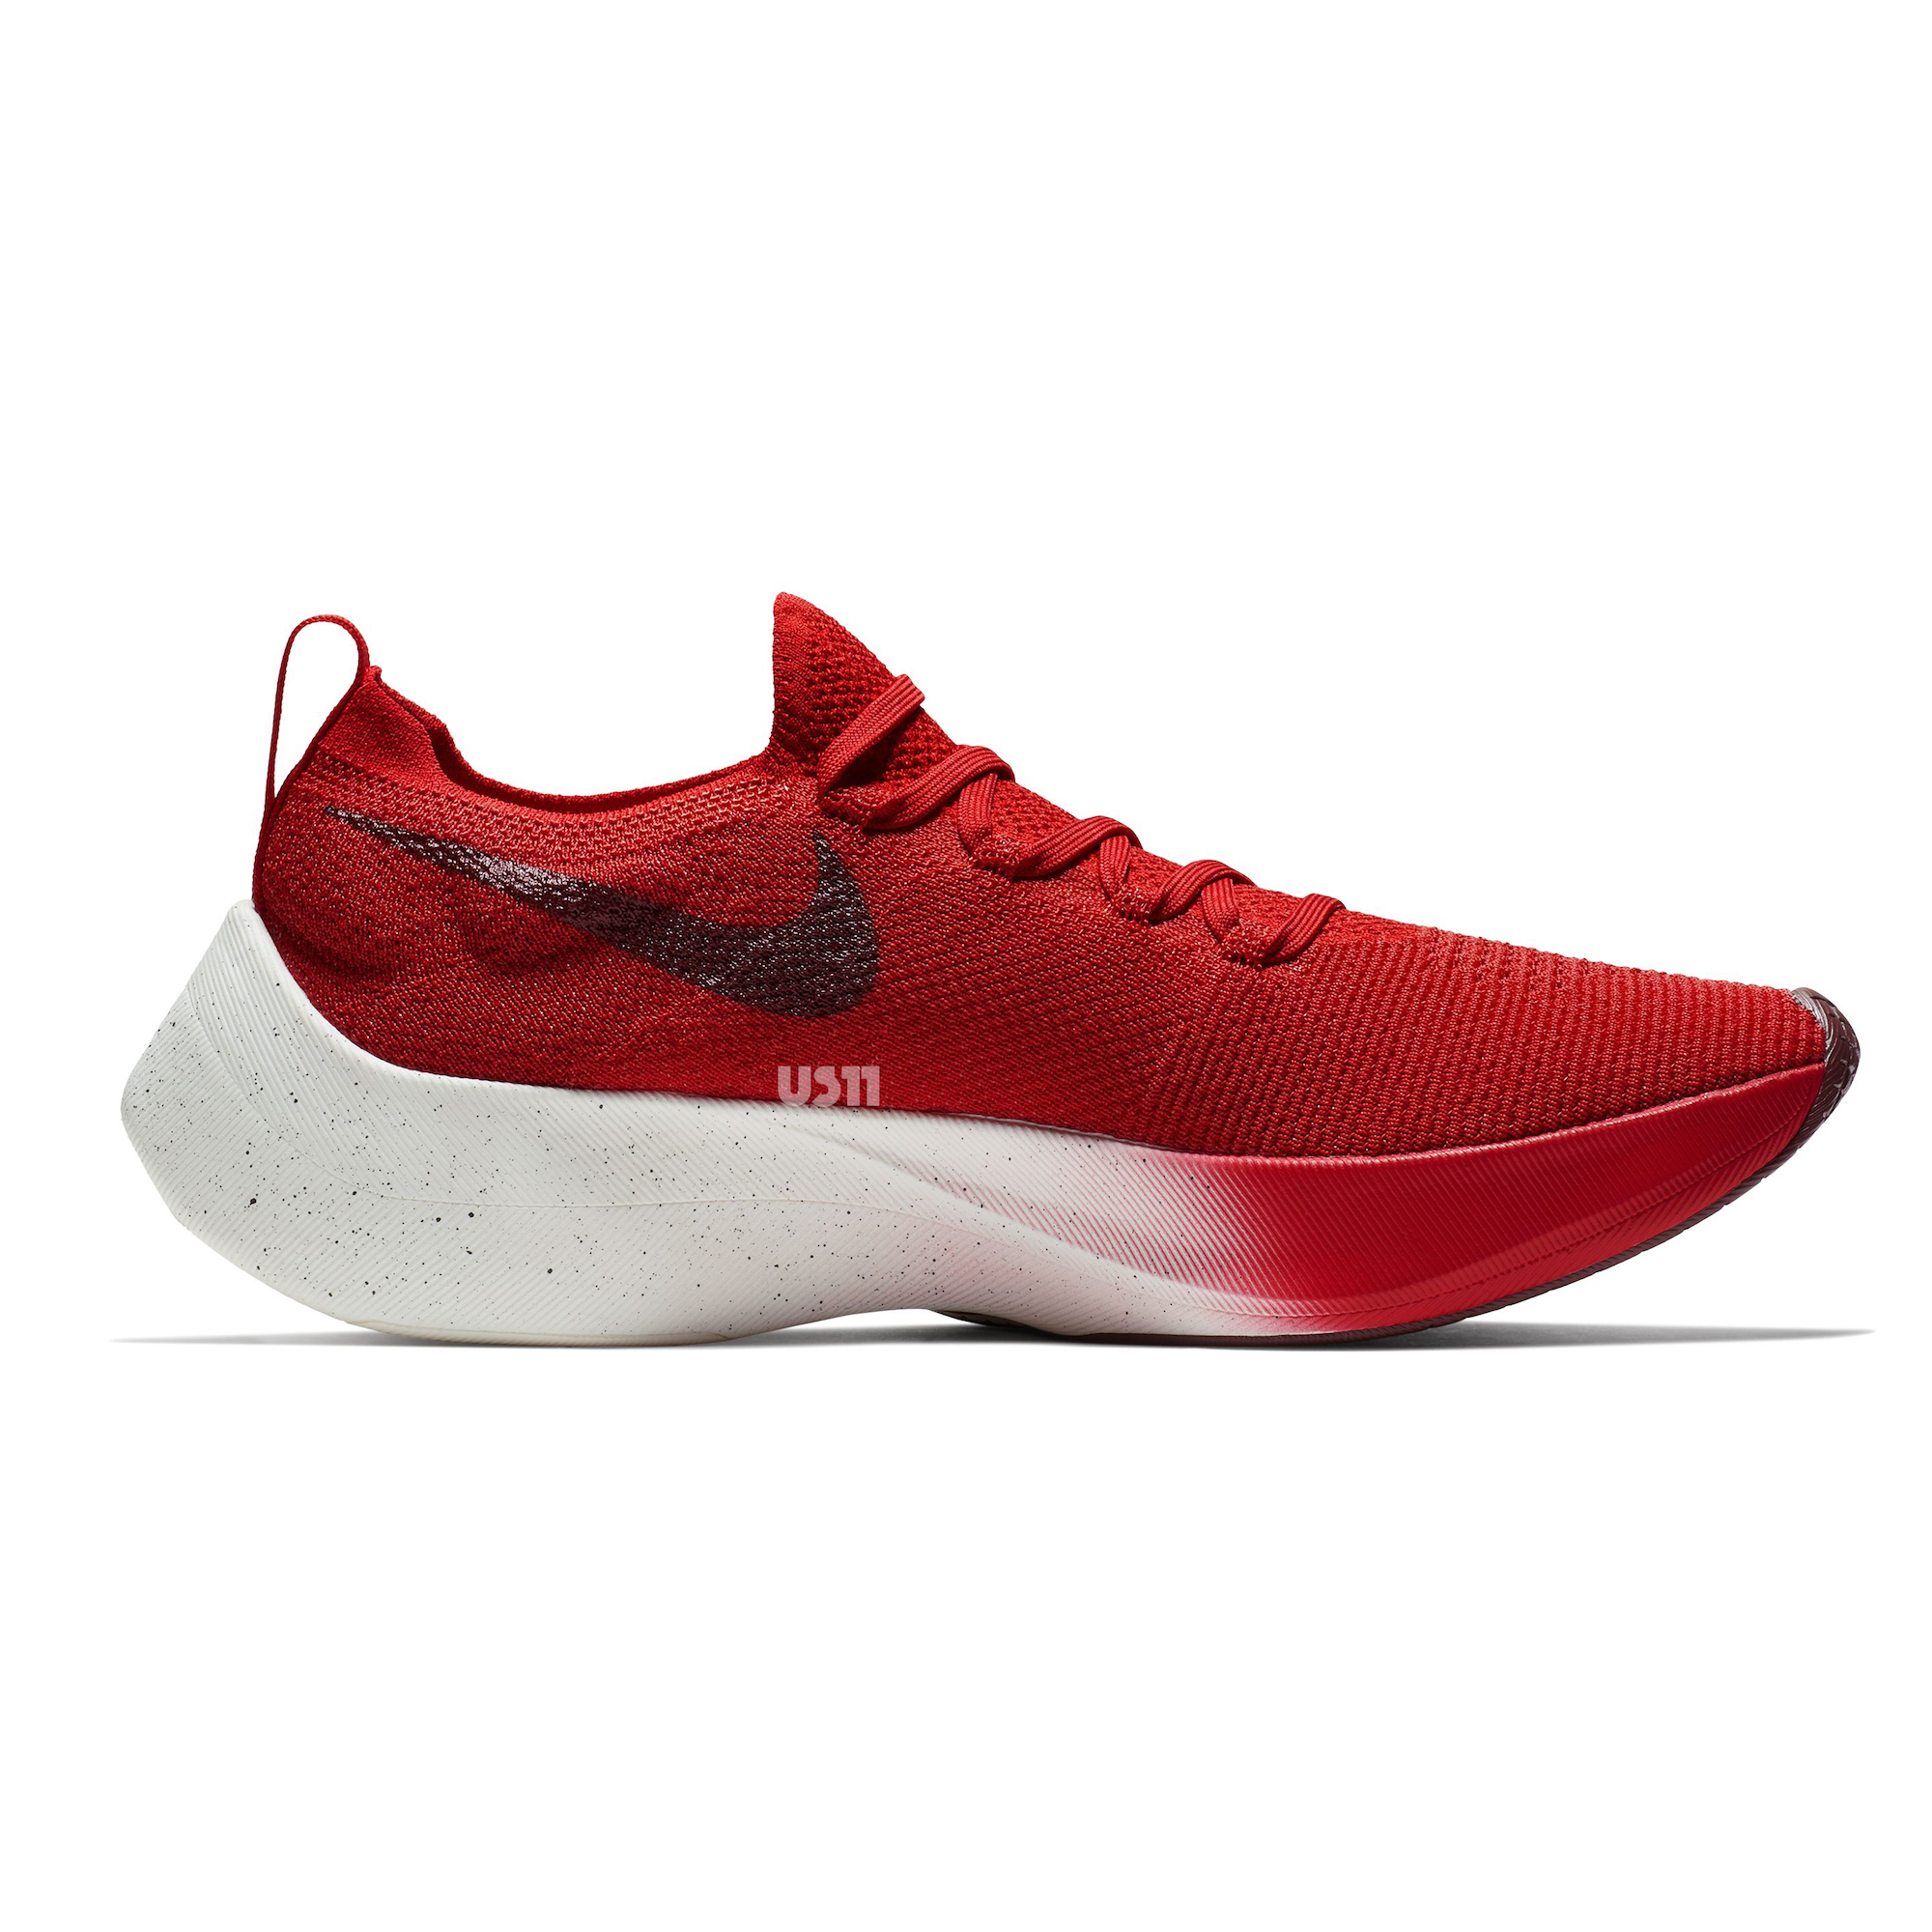 Nike-Vapor-Street-Flyknit-red-3.jpg